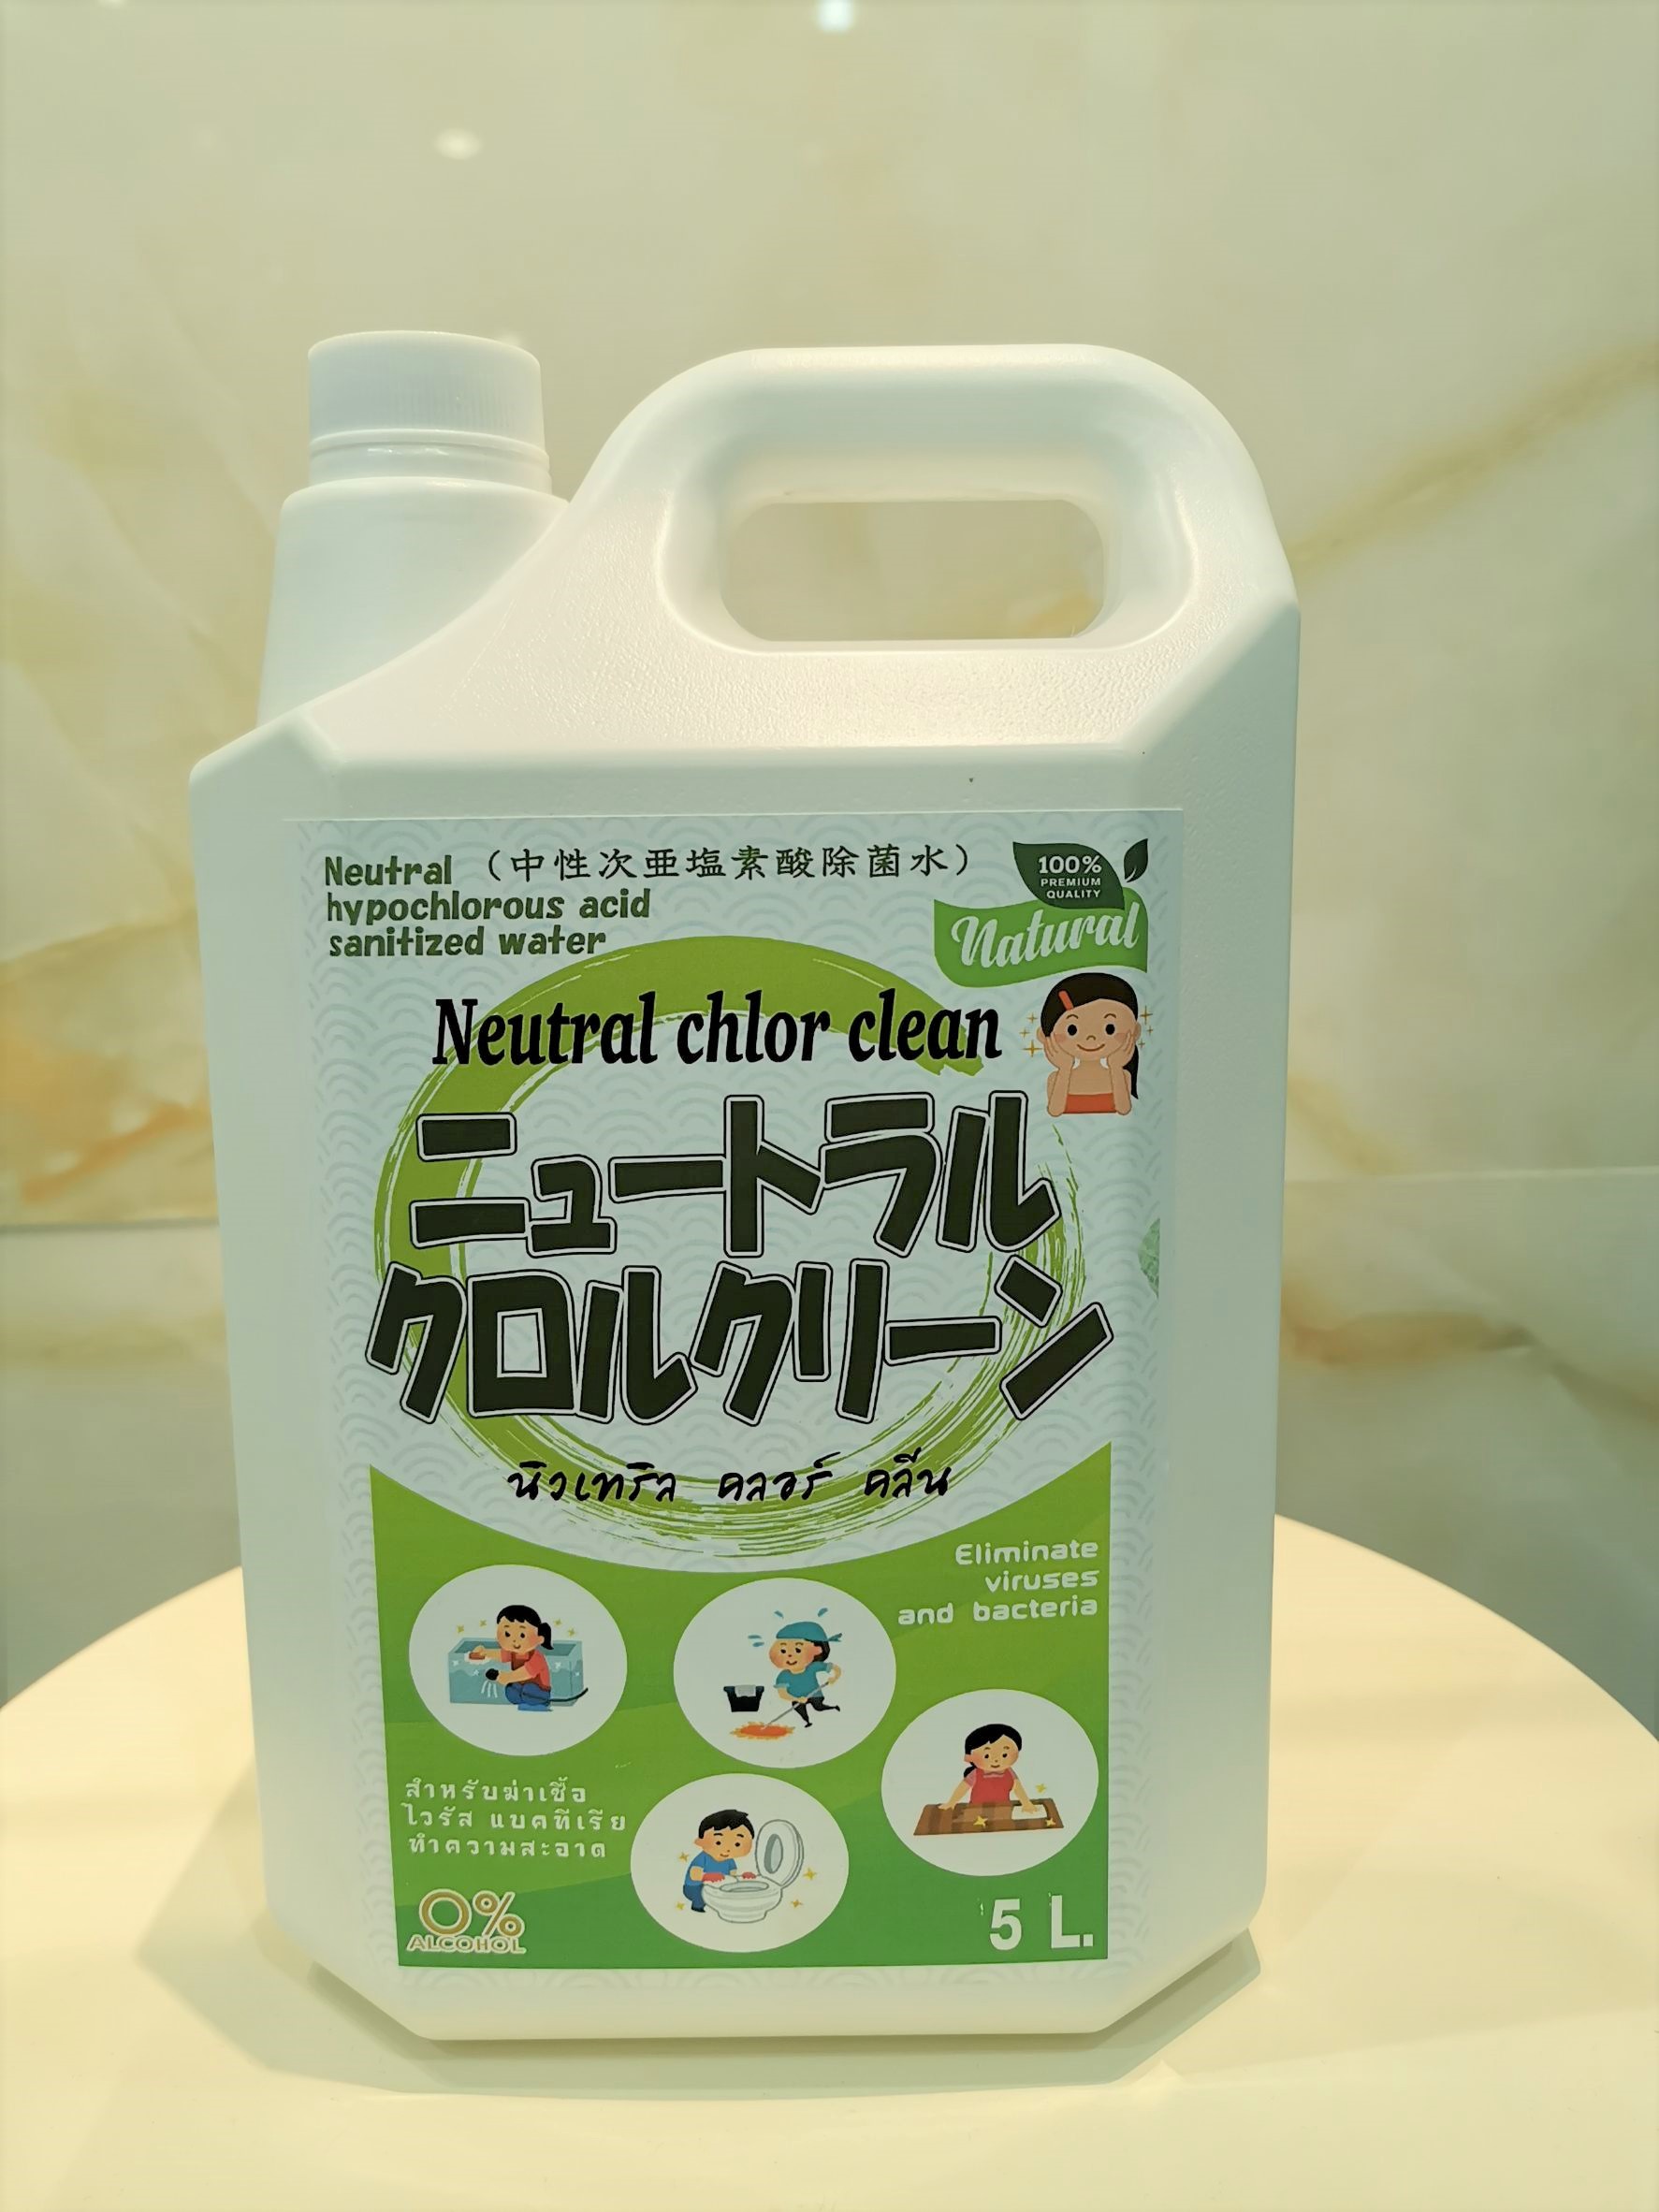 NEUTRAL CHLOR CLEAN (消毒用 次亜塩素酸ナトリウム)